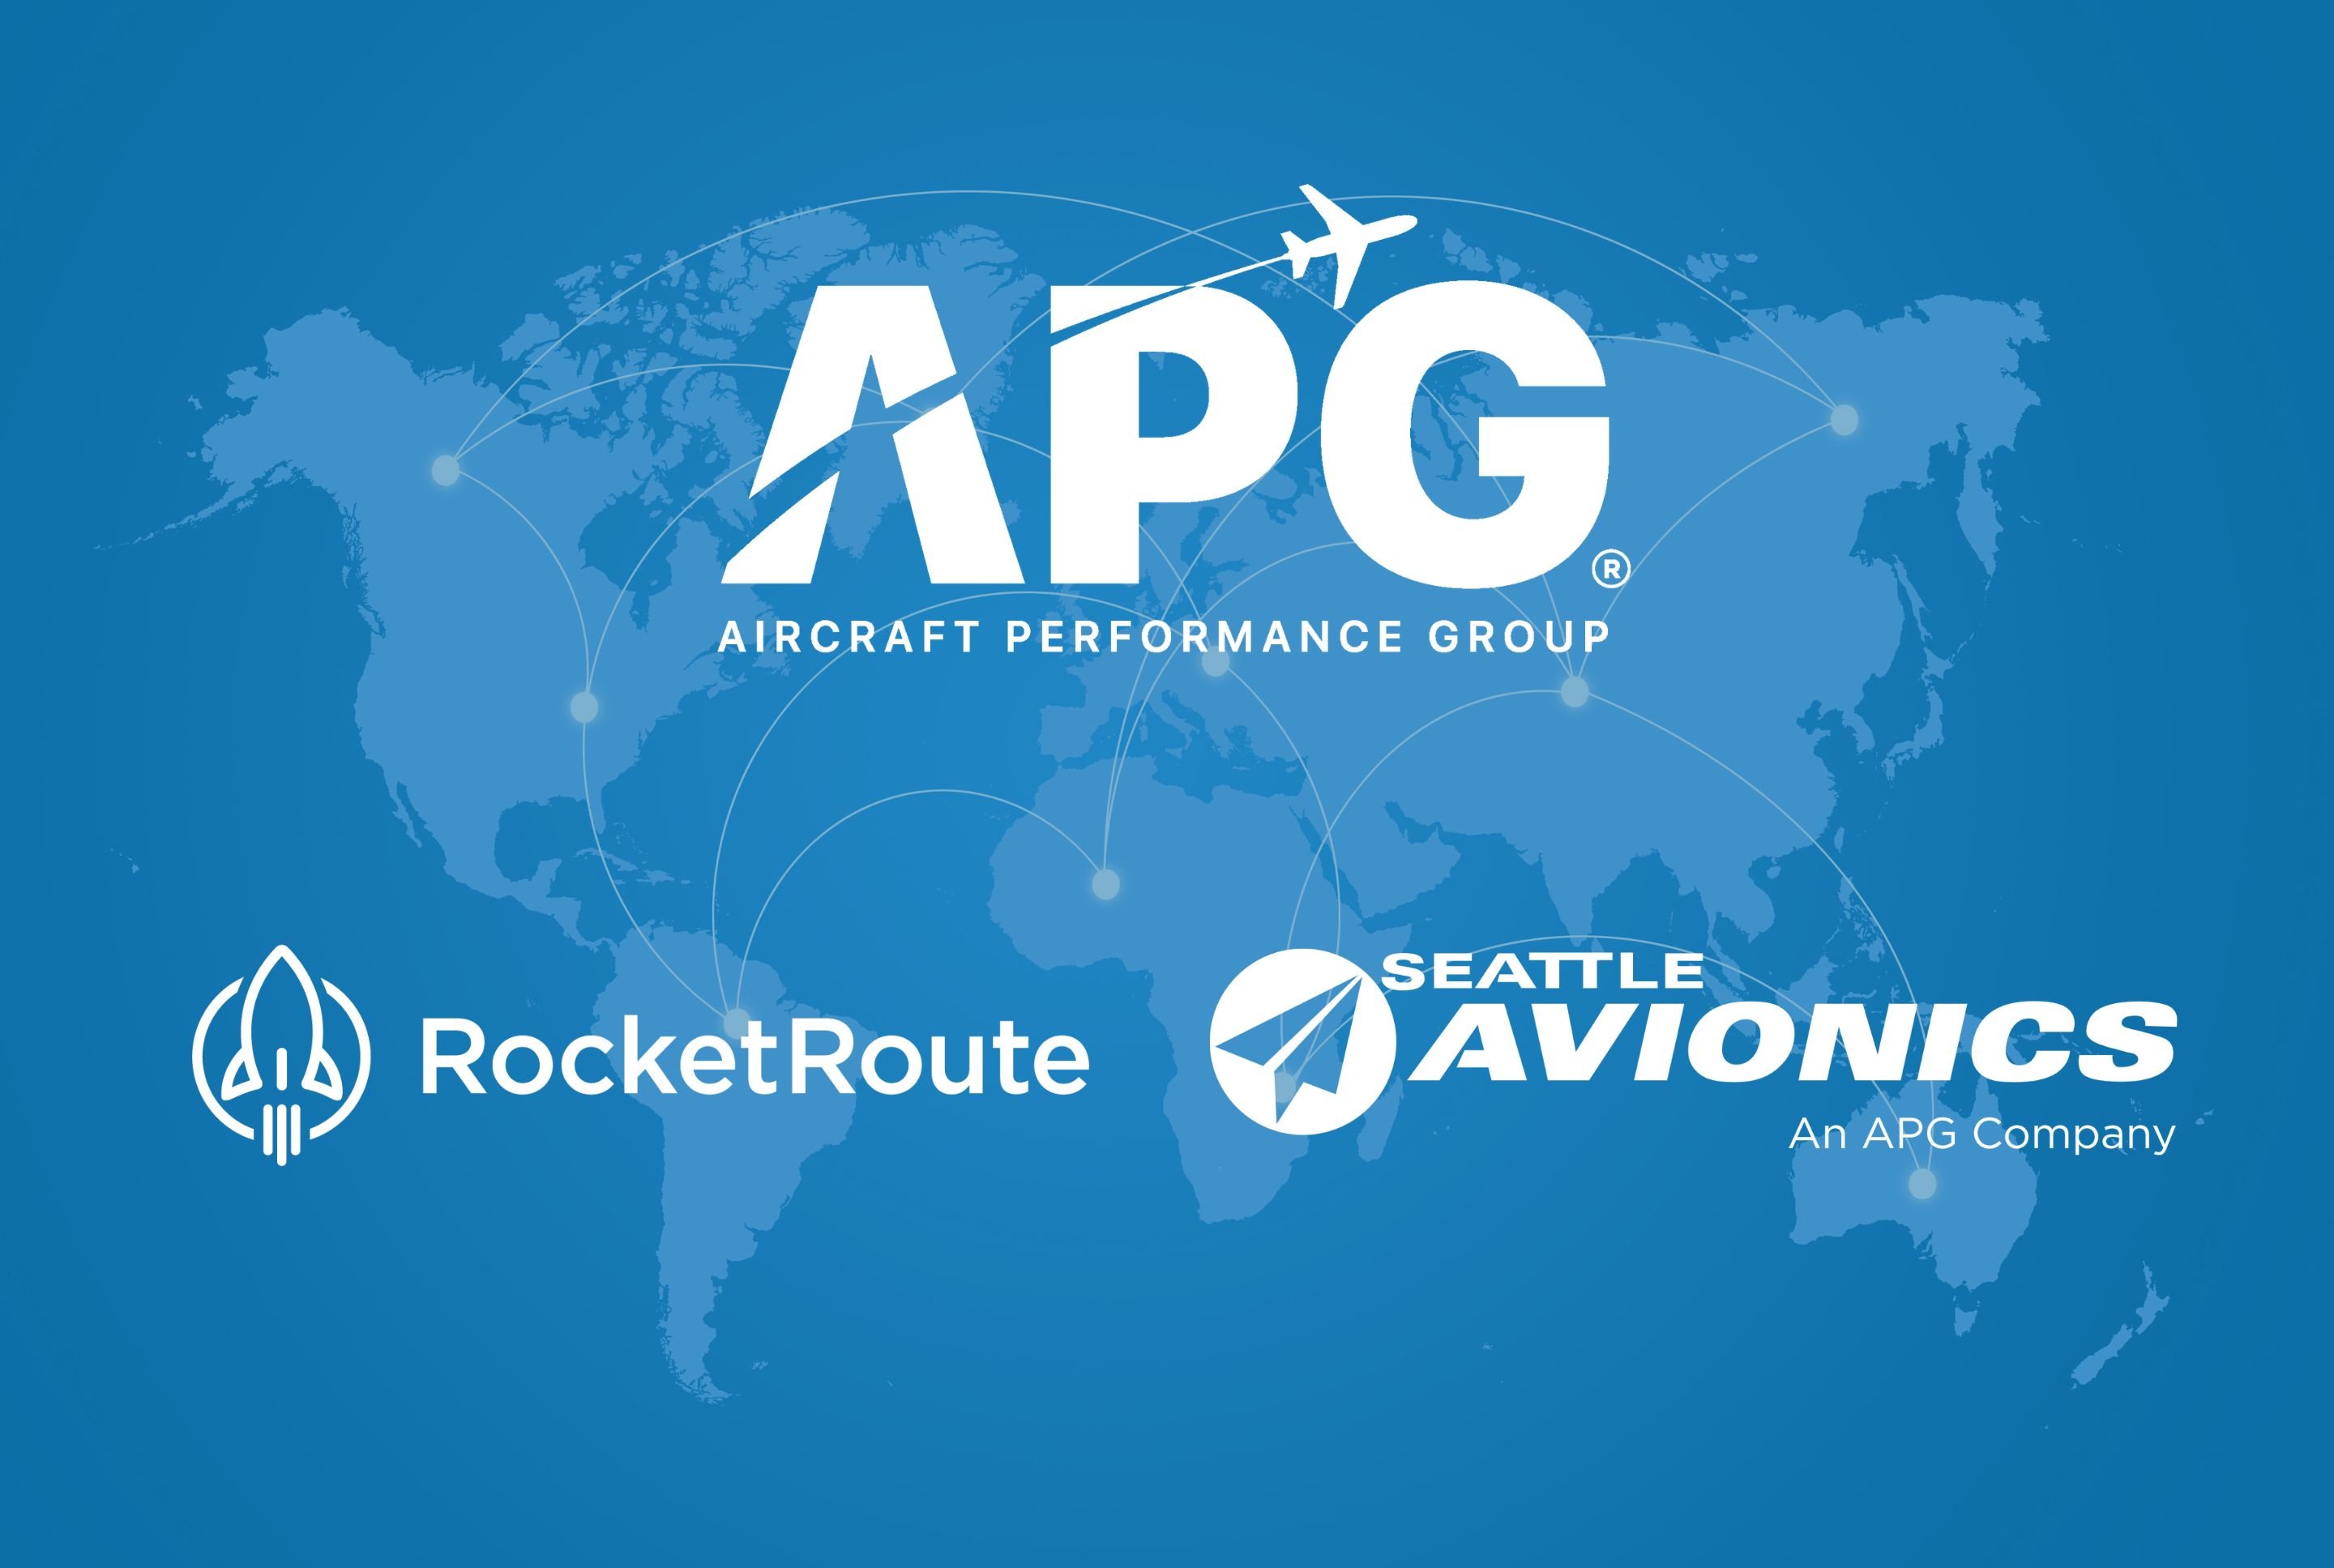 APG RocketRoute and Seattle Avionics logos